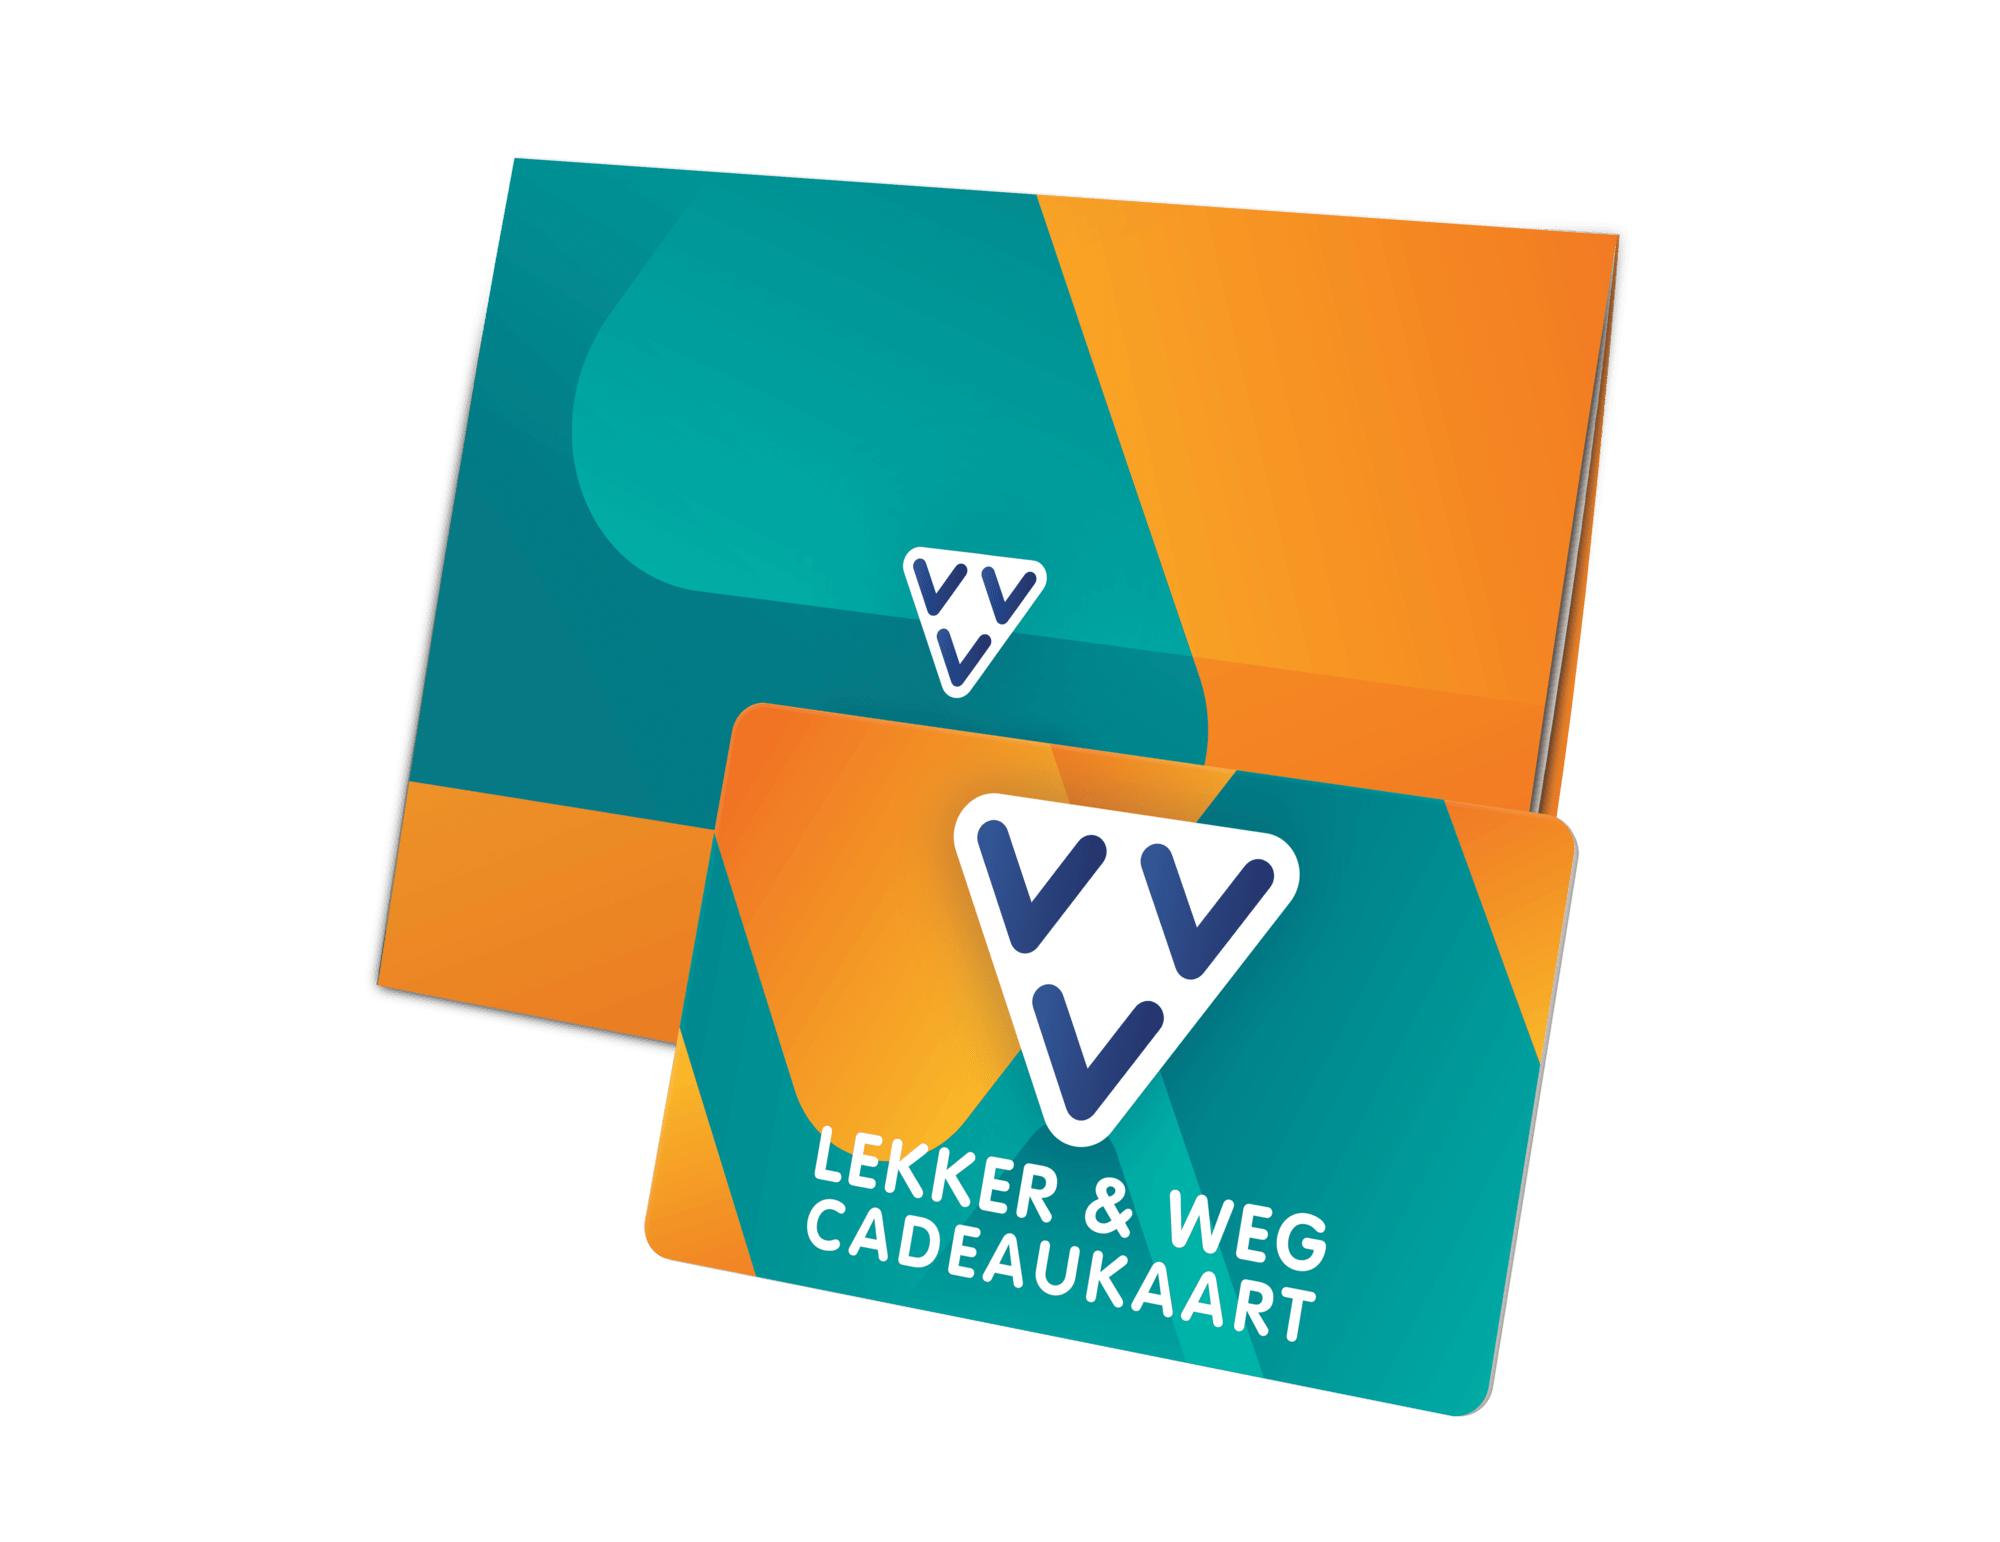 Beeldbank VVV Lekker & Weg Cadeaukaart